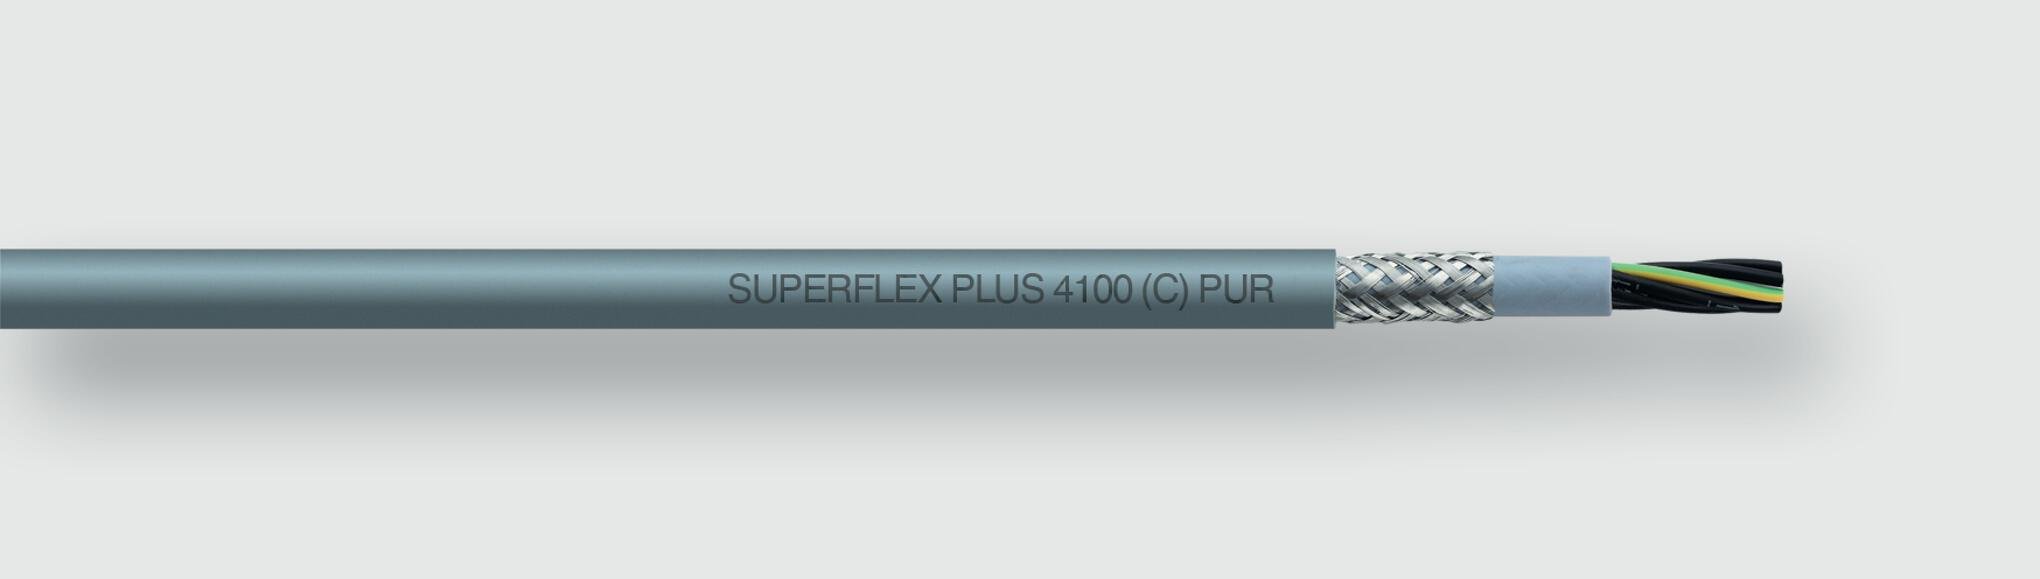 113211 - PUR control cables - C-track compatible